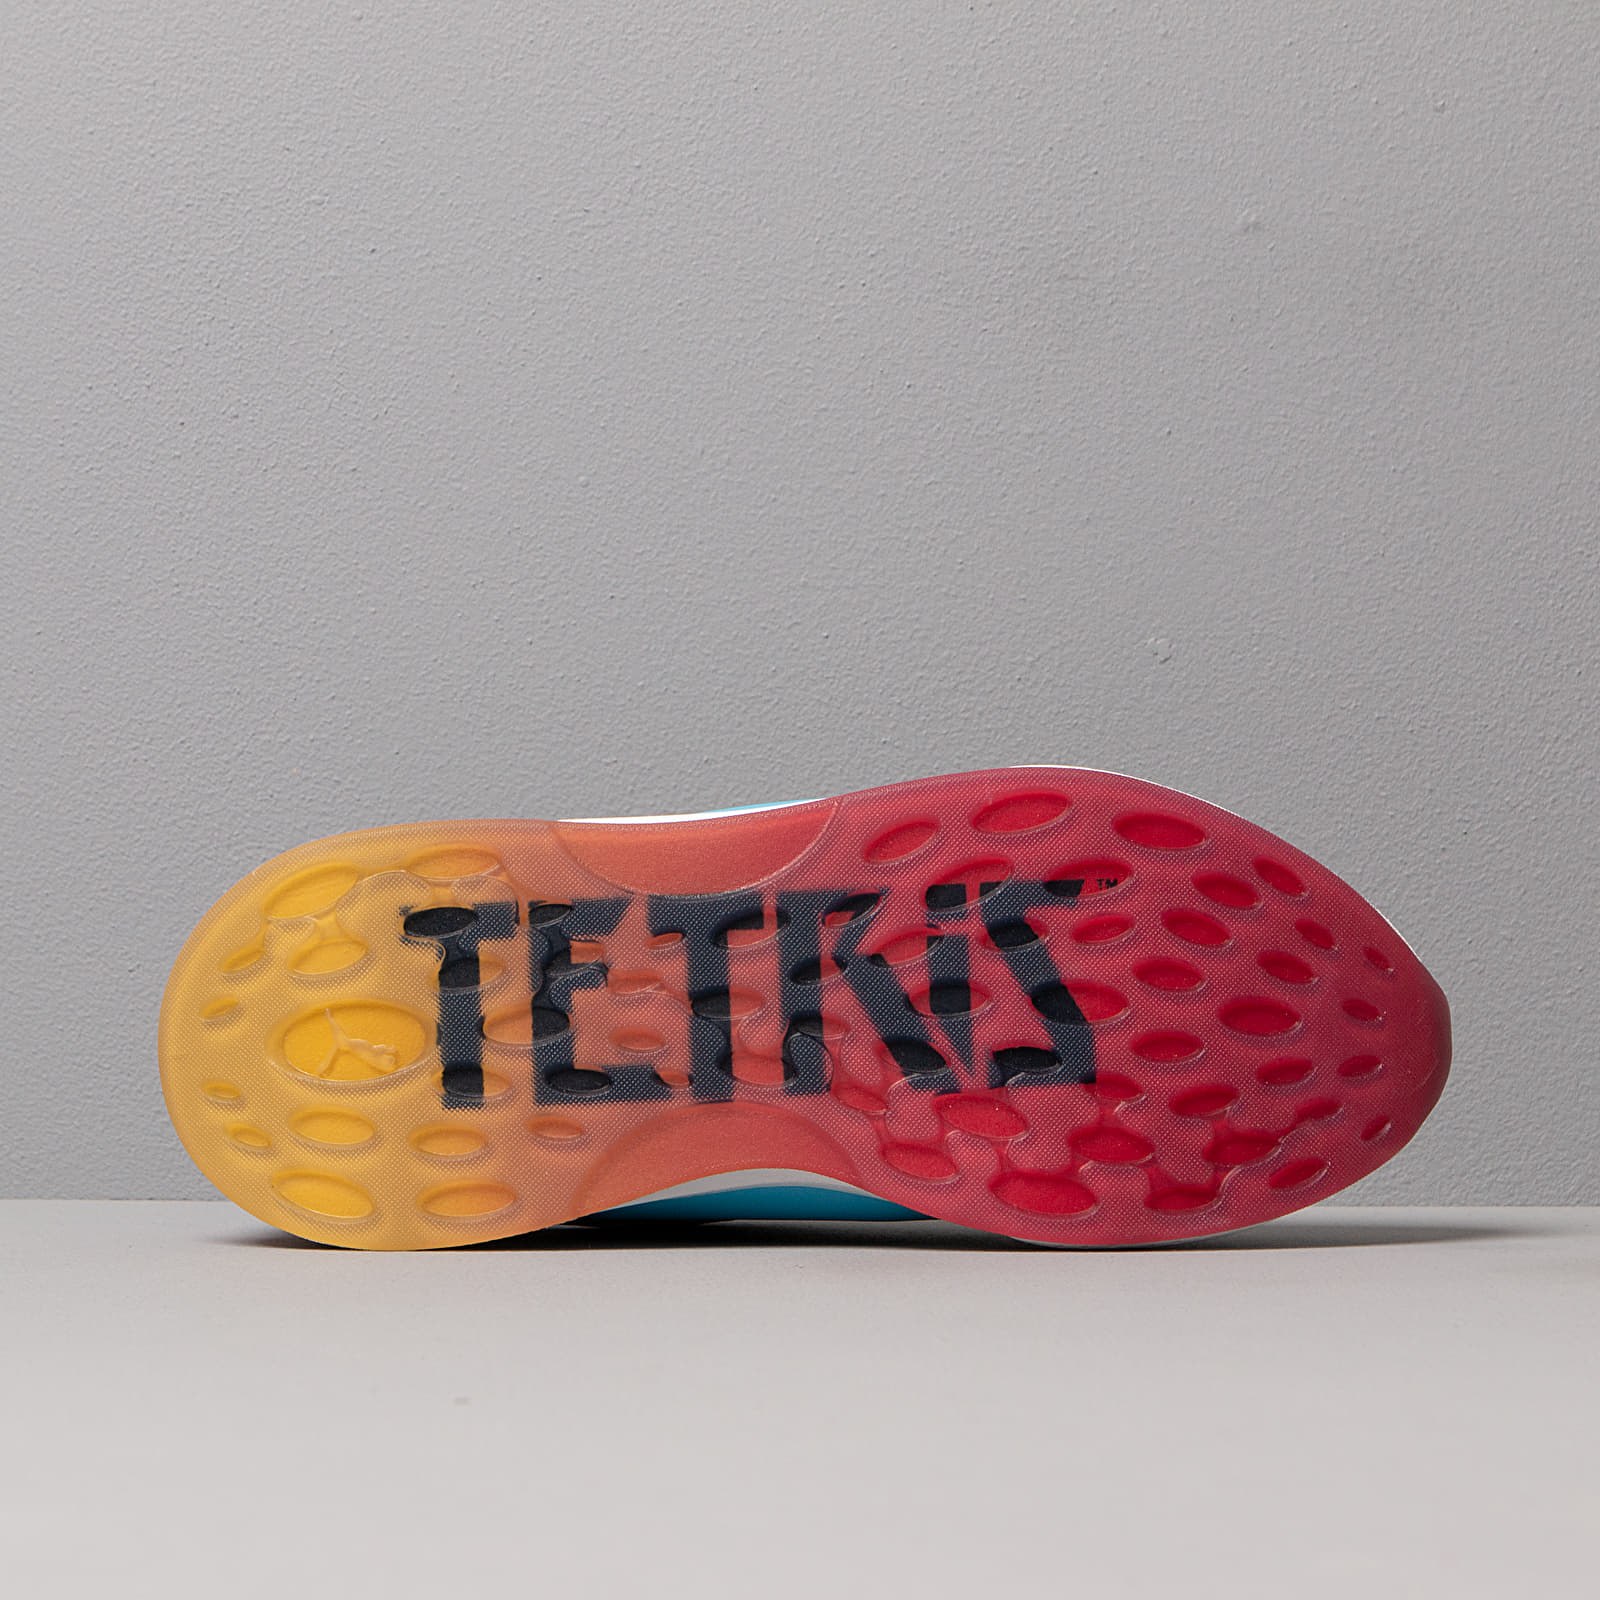 Puma RS 9.8 X Tetris sneakers | ASOS